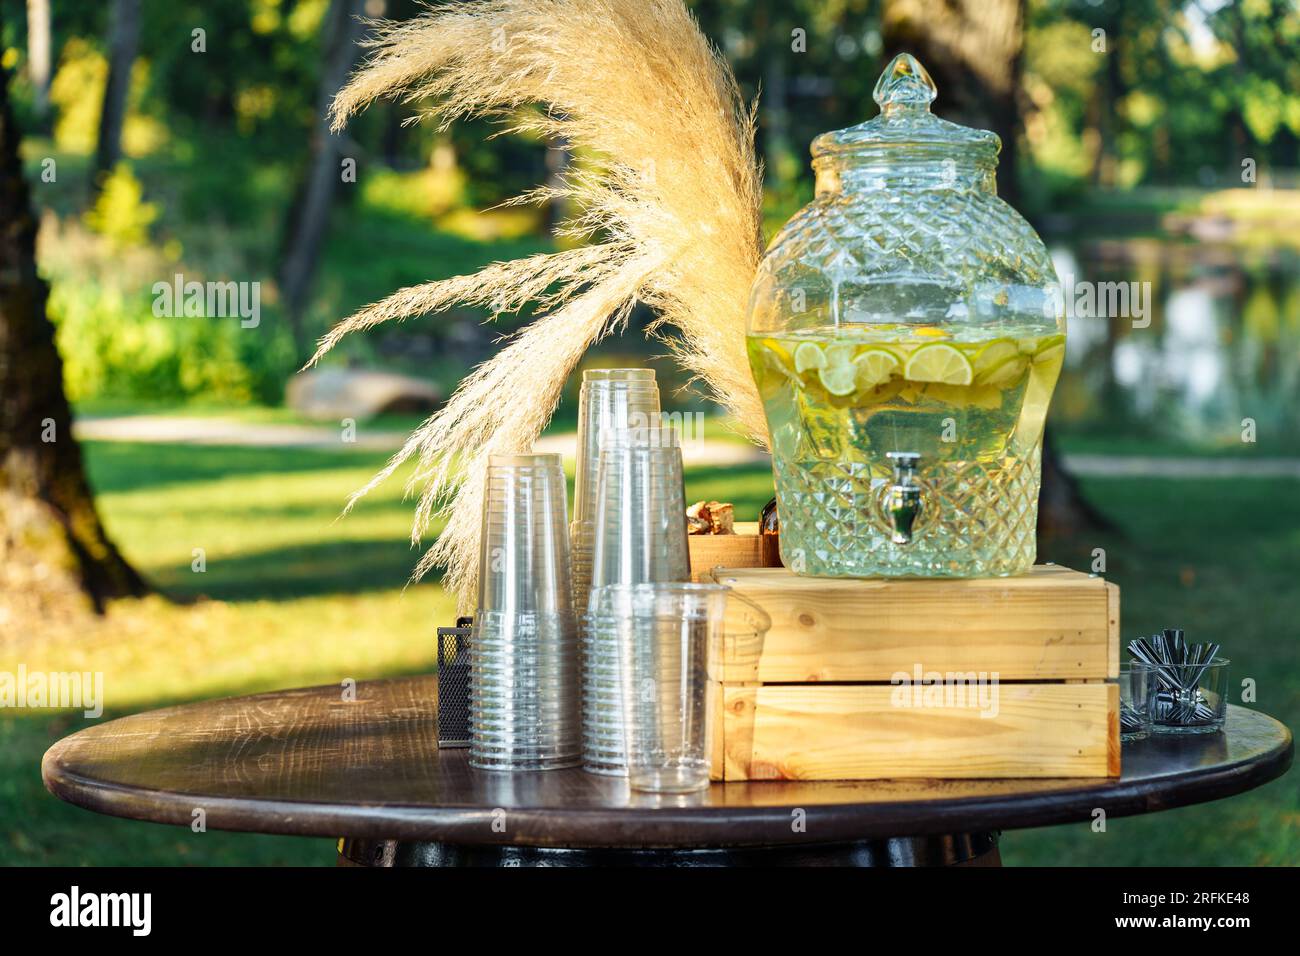 https://c8.alamy.com/comp/2RFKE48/lemonade-in-a-glass-decorative-beverage-dispenser-one-time-glasses-on-the-table-during-a-garden-party-2RFKE48.jpg